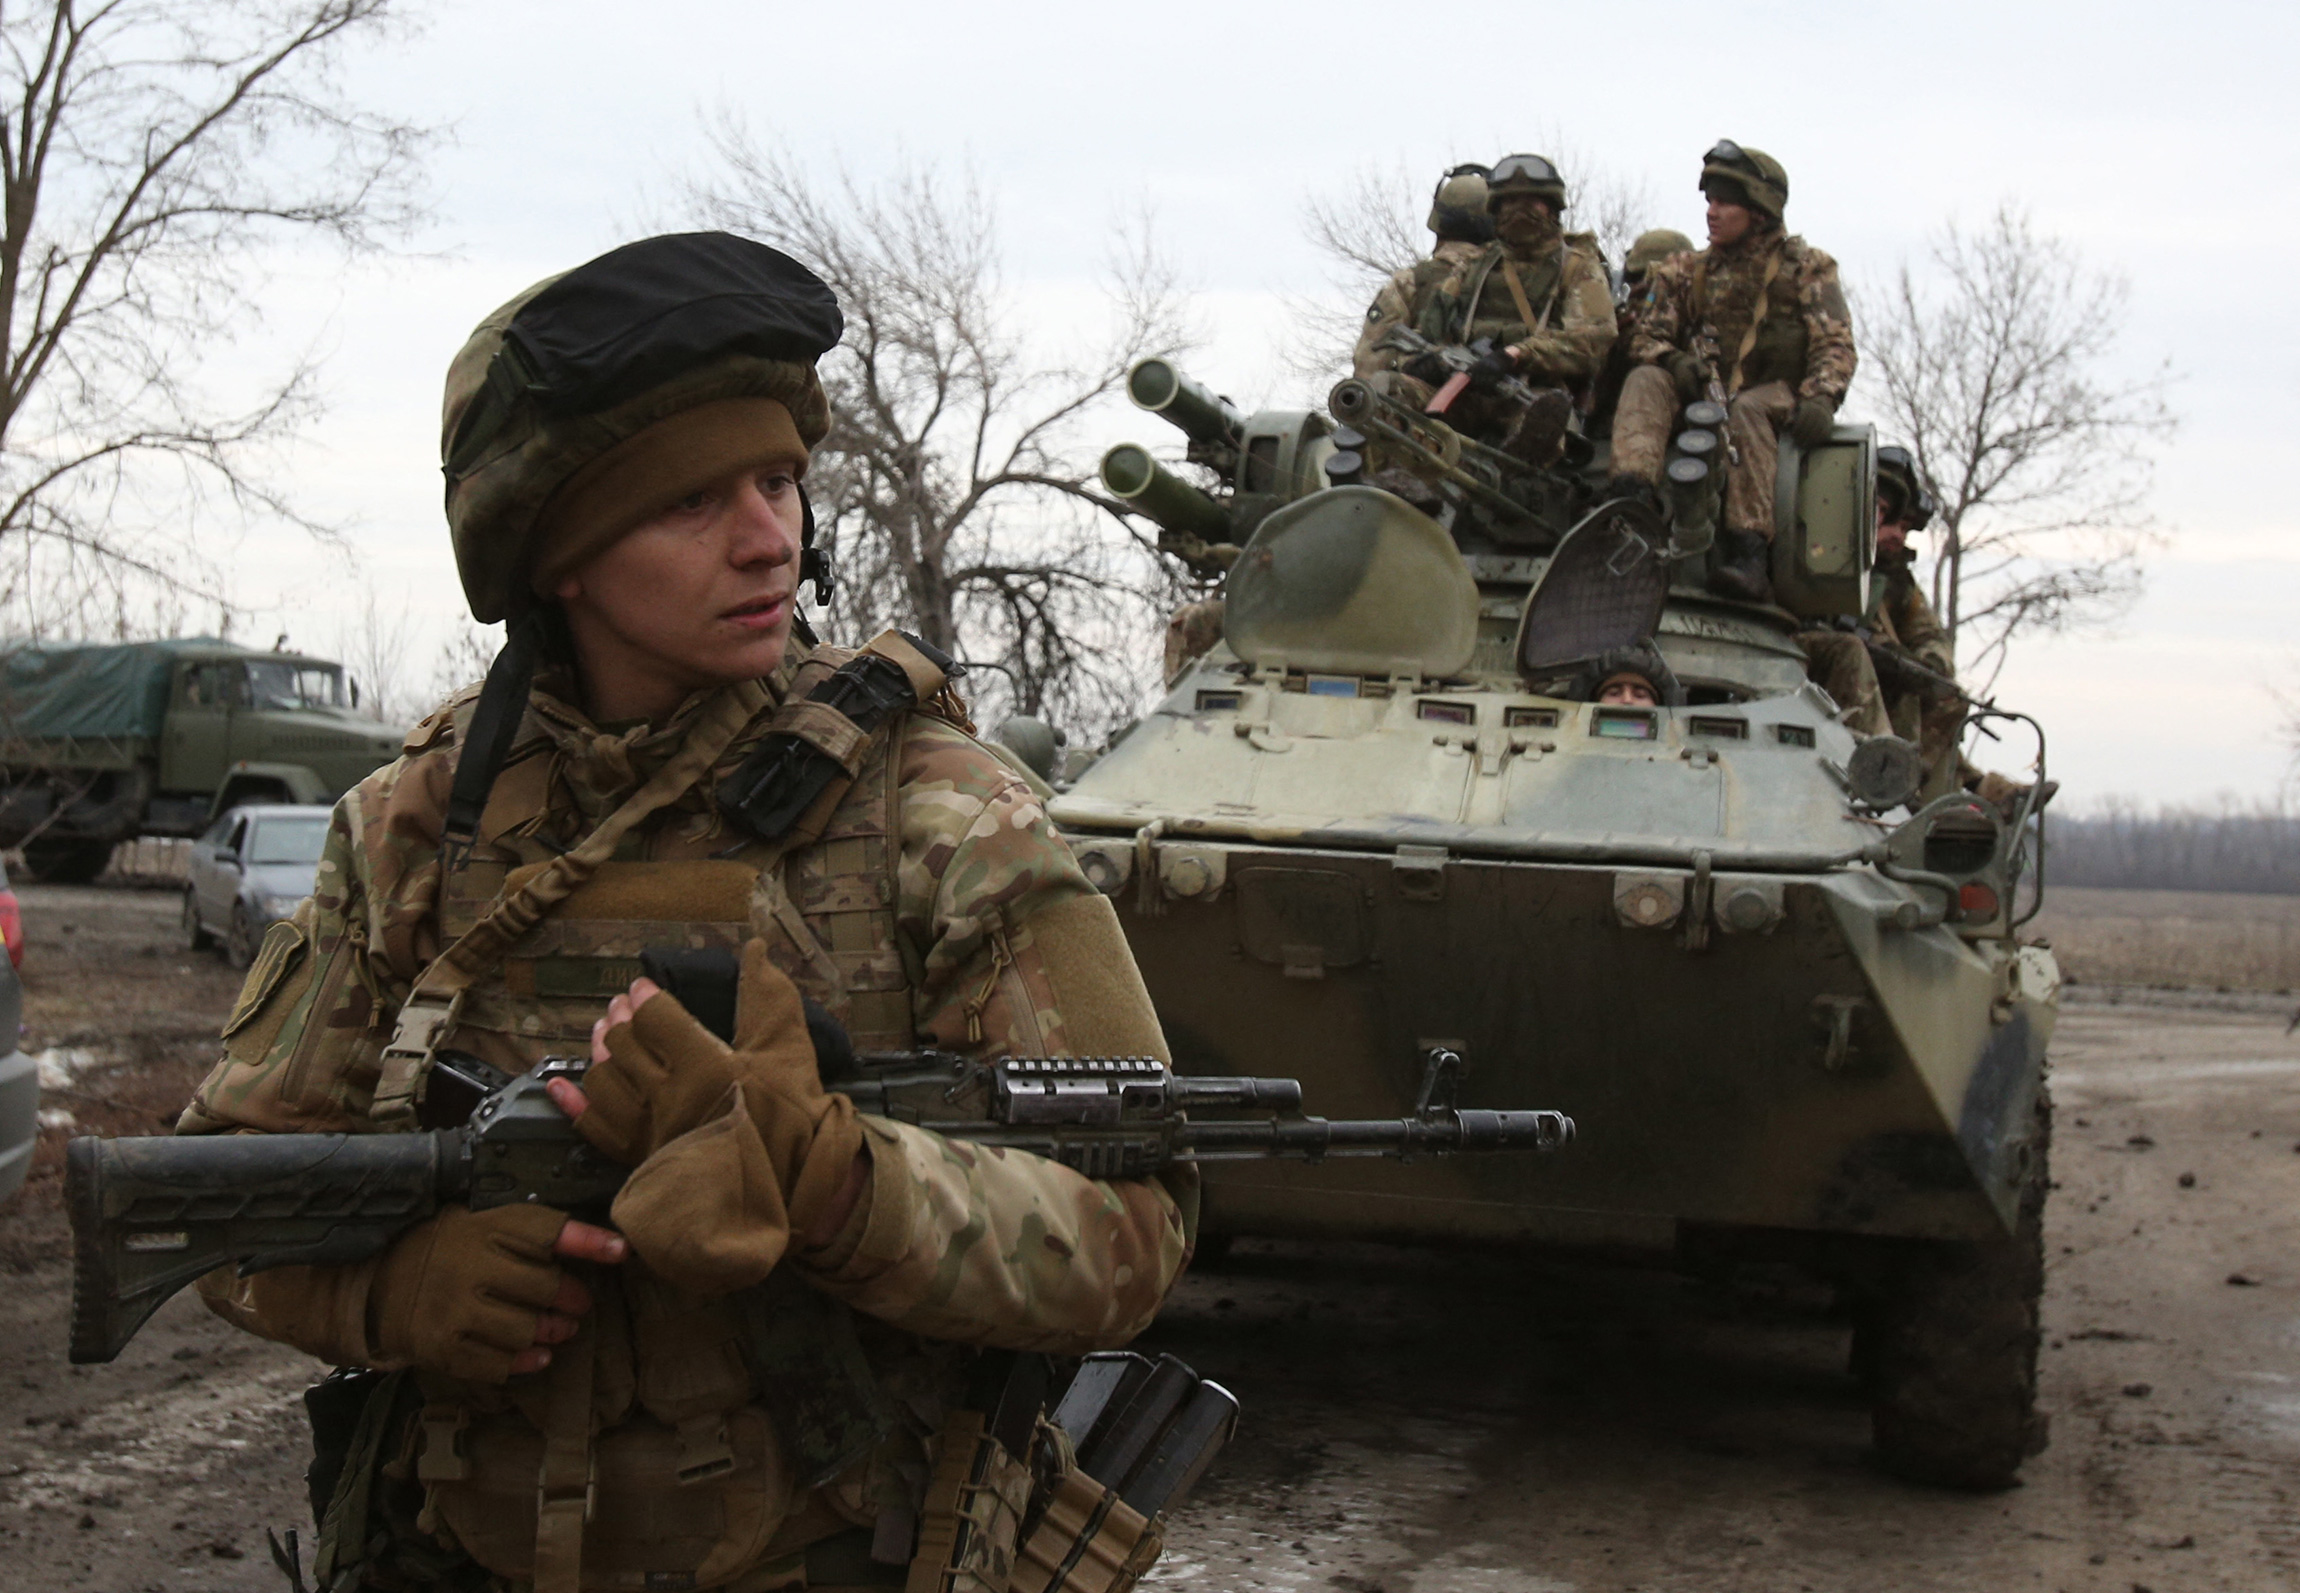 Ukrainian servicemen get ready to repel an attack in Ukraine's Lugansk region on Feb. 24.